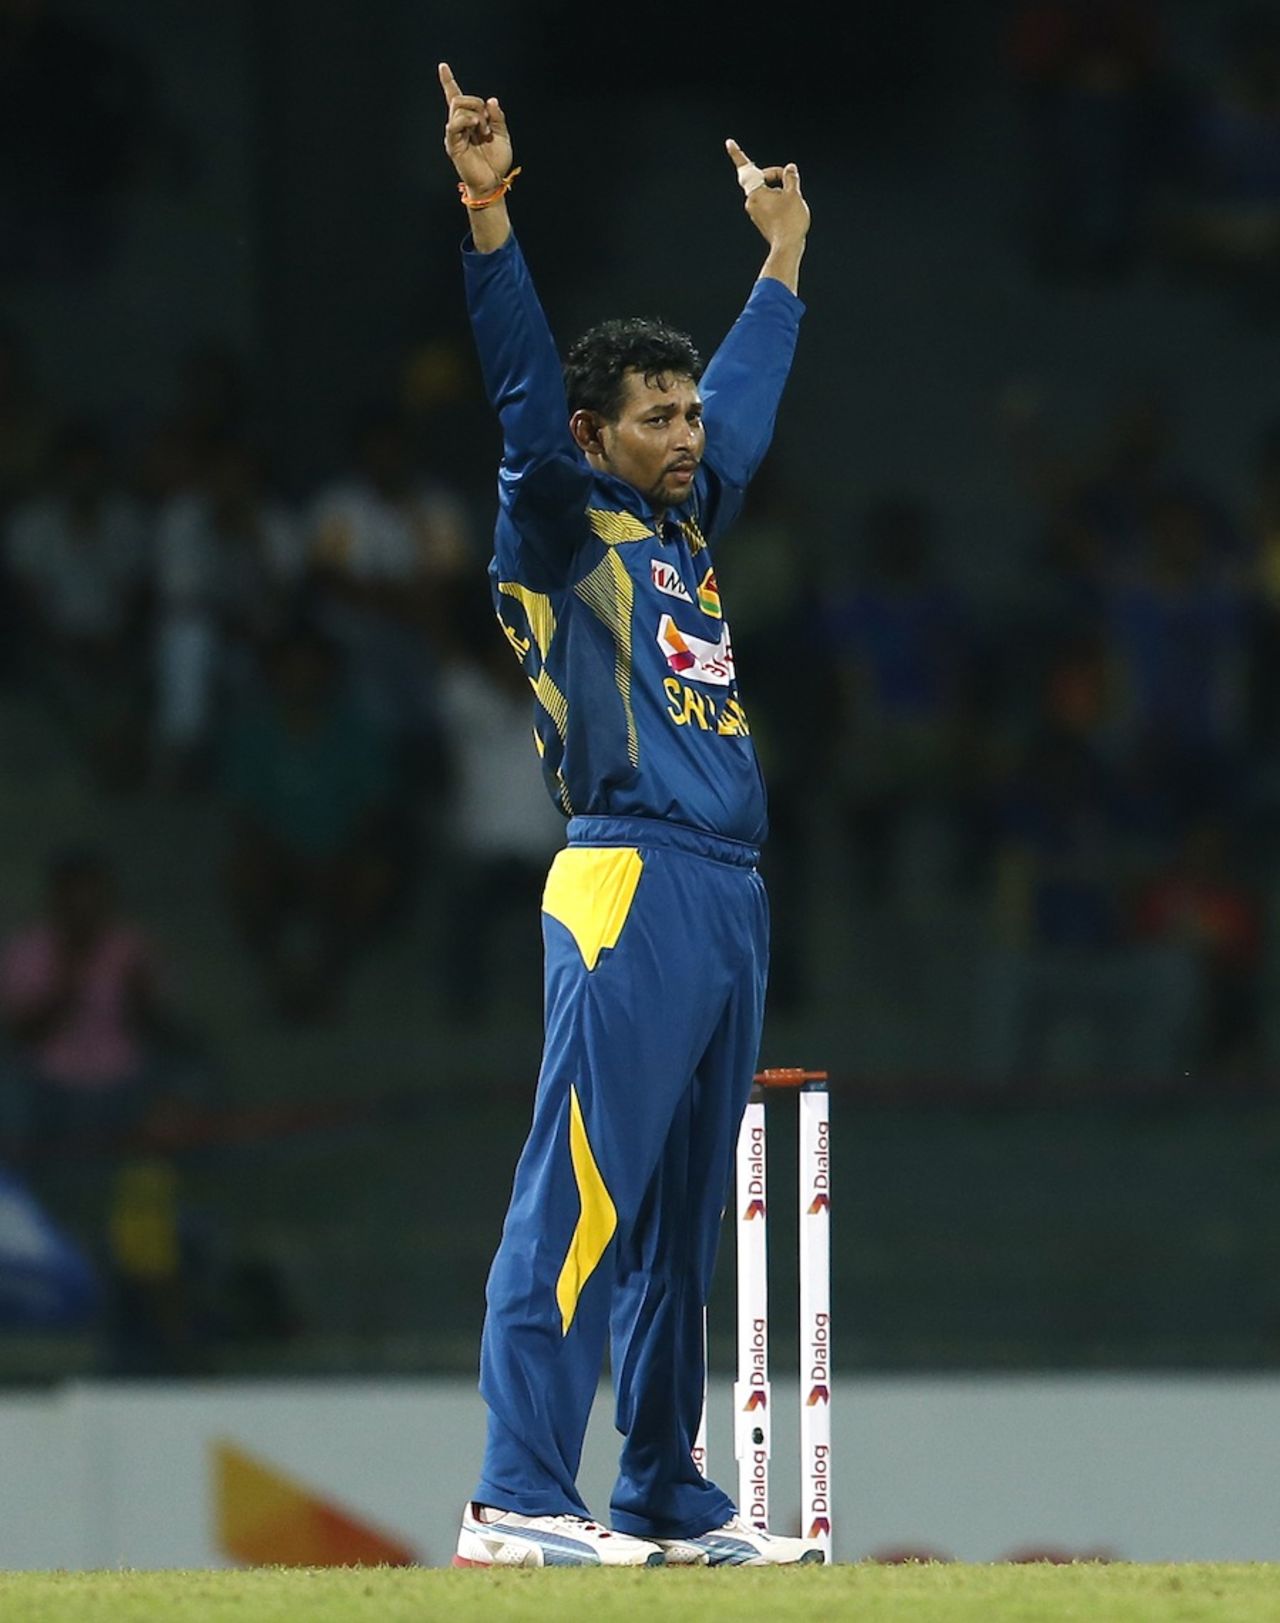 Tillakaratne Dilshan struck twice in his five overs, Sri Lanka v South Africa, 1st ODI, Colombo, July 20, 2013